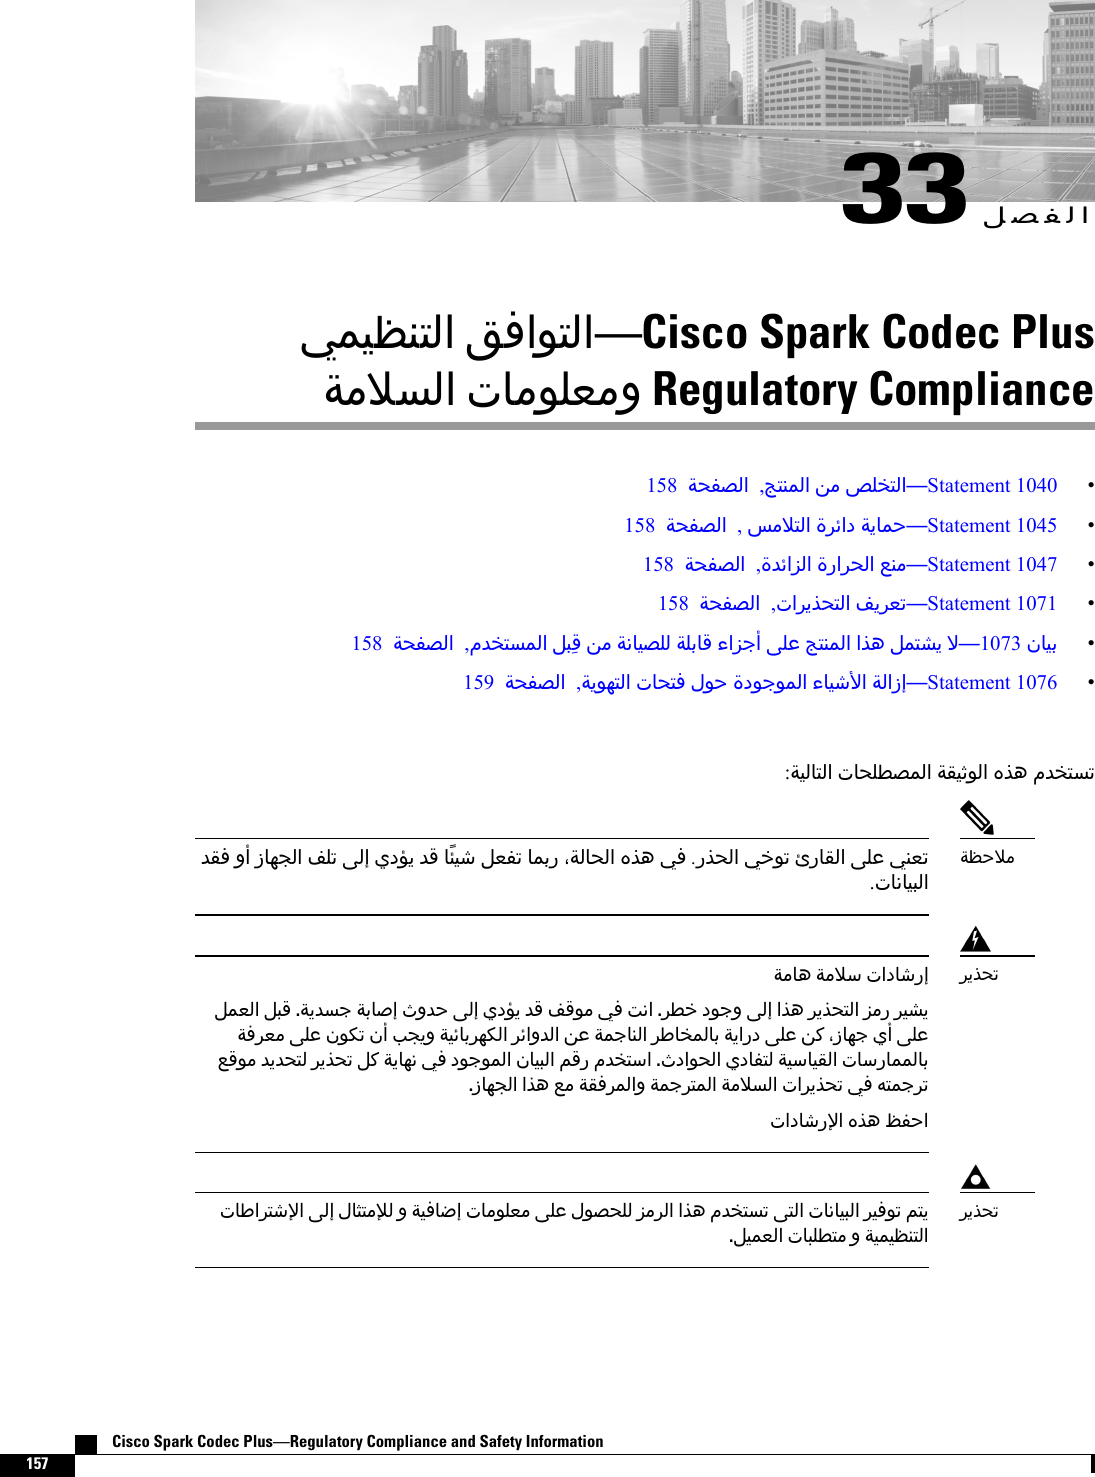 33󰂿󰂝󰂵󰃀󰃓󰃅󰃕󰂩󰃉󰁹󰃀 󰂷󰂴󰃏󰁹󰃀Cisco Spark Codec Plus󰁵󰃄󰃝󰂕󰃀 󰁯󰃄󰃏󰃁󰂭󰃄 Regulatory Compliance158 󰁵󰂅󰂵󰂝󰃀 ,󰁿󰁹󰃉󰃅󰃀 󰃇󰃄 󰂛󰃁󰂉󰁹󰃀Statement 1040158 󰁵󰂅󰂵󰂝󰃀 ,󰂓󰃄󰃝󰁹󰃀 󰂏󰁬 󰁵󰃔󰁯󰃅󰂄Statement 1045158 󰁵󰂅󰂵󰂝󰃀 ,󰂋󰁬󰂑󰃀 󰂏󰂅󰃀 󰂫󰃉󰃄Statement 1047158 󰁵󰂅󰂵󰂝󰃀 ,󰂏󰃔󰂍󰂅󰁹󰃀 󰂳󰃔󰂏󰂭󰁸Statement 1071158 󰁵󰂅󰂵󰂝󰃀 ,󰂋󰂉󰁹󰂕󰃅󰃀 󰂿󰁳󰂸 󰃇󰃄 󰁵󰃈󰁯󰃕󰂝󰃁󰃀 󰁵󰃁󰁲󰁯󰂸 󰂑󰂀 󰃑󰃁󰂬 󰁿󰁹󰃉󰃅󰃀 󰂍󰃌 󰂿󰃅󰁹󰂙󰃔 󰃜1073 󰁯󰃕󰁲159 󰁵󰂅󰂵󰂝󰃀 ,󰁵󰃔󰃏󰃍󰁹󰃀 󰁯󰂅󰁹󰂴 󰃏󰂄 󰃏󰂀󰃏󰃅󰃀 󰁯󰃕󰂘󰃘 󰁵󰃀Statement 1076:󰁵󰃕󰃀󰁯󰁹󰃀 󰁯󰂅󰃁󰂥󰂝󰃅󰃀 󰁵󰂹󰃕󰁼󰃏󰃀 󰂍󰃌 󰂋󰂉󰁹󰂕󰁸󰂋󰂹󰂴  󰁯󰃍󰂁󰃀 󰂳󰃁󰁸 󰃑󰃀 󰁧󰃔 󰂋󰂸 󰁯󰁭󰃕󰂘 󰂿󰂭󰂵󰁸 󰁯󰃅󰁲 󰁵󰃀󰁯󰂅󰃀 󰂍󰃌 󰃓󰂴 .󰂍󰂅󰃀 󰃓󰂈󰃏󰁸 󰁯󰂹󰃀 󰃑󰃁󰂬 󰃓󰃉󰂭󰁸.󰁯󰃈󰁯󰃕󰁳󰃀󰁵󰂩󰂄󰃝󰃄󰁵󰃄󰁯󰃌 󰁵󰃄󰃝󰂔 󰁯󰂘󰂿󰃅󰂭󰃀 󰂿󰁳󰂸 .󰁵󰃔󰂋󰂕󰂀 󰁵󰁲󰁯󰂜 󰂋󰂄 󰃑󰃀 󰁧󰃔 󰂋󰂸 󰂳󰂸󰃏󰃄 󰃓󰂴 󰁷󰃈 .󰂏󰂥󰂈 󰃏󰂀 󰃑󰃀 󰂍󰃌 󰂏󰃔󰂍󰂅󰁹󰃀 󰂑󰃄 󰂏󰃕󰂙󰃔󰁵󰂴󰂏󰂭󰃄 󰃑󰃁󰂬 󰃏󰂽󰁸  󰁱󰂁󰃔 󰁵󰃕󰁬󰁯󰁲󰂏󰃍󰂽󰃀 󰂏󰁬󰂋󰃀 󰃇󰂬 󰁵󰃅󰂀󰁯󰃉󰃀 󰂏󰂤󰁯󰂉󰃅󰃀󰁯󰁲 󰁵󰃔 󰃑󰃁󰂬 󰃇󰂼 󰁯󰃍󰂀  󰃑󰃁󰂬󰂫󰂸󰃏󰃄 󰂋󰃔󰂋󰂅󰁹󰃀 󰂏󰃔󰂍󰂅󰁸 󰂿󰂼 󰁵󰃔󰁯󰃍󰃈 󰃓󰂴 󰃏󰂀󰃏󰃅󰃀 󰁯󰃕󰁳󰃀 󰃃󰂸 󰂋󰂉󰁹󰂔 .󰃏󰂅󰃀 󰁯󰂵󰁹󰃀 󰁵󰃕󰂔󰁯󰃕󰂹󰃀 󰁯󰂔󰁯󰃅󰃅󰃀󰁯󰁲.󰁯󰃍󰂁󰃀 󰂍󰃌 󰂫󰃄 󰁵󰂹󰂴󰂏󰃅󰃀 󰁵󰃅󰂀󰂏󰁹󰃅󰃀 󰁵󰃄󰃝󰂕󰃀 󰂏󰃔󰂍󰂅󰁸 󰃓󰂴 󰃋󰁹󰃅󰂀󰂏󰁸󰁯󰂘󰃚 󰂍󰃌 󰂧󰂵󰂄󰂏󰃔󰂍󰂅󰁸󰁯󰂤󰂏󰁹󰂘󰃚 󰃑󰃀 󰁯󰁽󰁹󰃄󰃛󰃀  󰁵󰃕󰂴󰁯󰂠 󰁯󰃄󰃏󰃁󰂭󰃄 󰃑󰃁󰂬 󰃏󰂝󰂅󰃁󰃀 󰂑󰃄󰂏󰃀 󰂍󰃌 󰂋󰂉󰁹󰂕󰁸 󰃑󰁹󰃀 󰁯󰃈󰁯󰃕󰁳󰃀 󰂏󰃕󰂴󰃏󰁸 󰃃󰁹󰃔.󰂿󰃕󰃅󰂭󰃀 󰁯󰁳󰃁󰂥󰁹󰃄  󰁵󰃕󰃅󰃕󰂩󰃉󰁹󰃀󰂏󰃔󰂍󰂅󰁸Cisco Spark Codec PlusRegulatory Compliance and Safety Information157